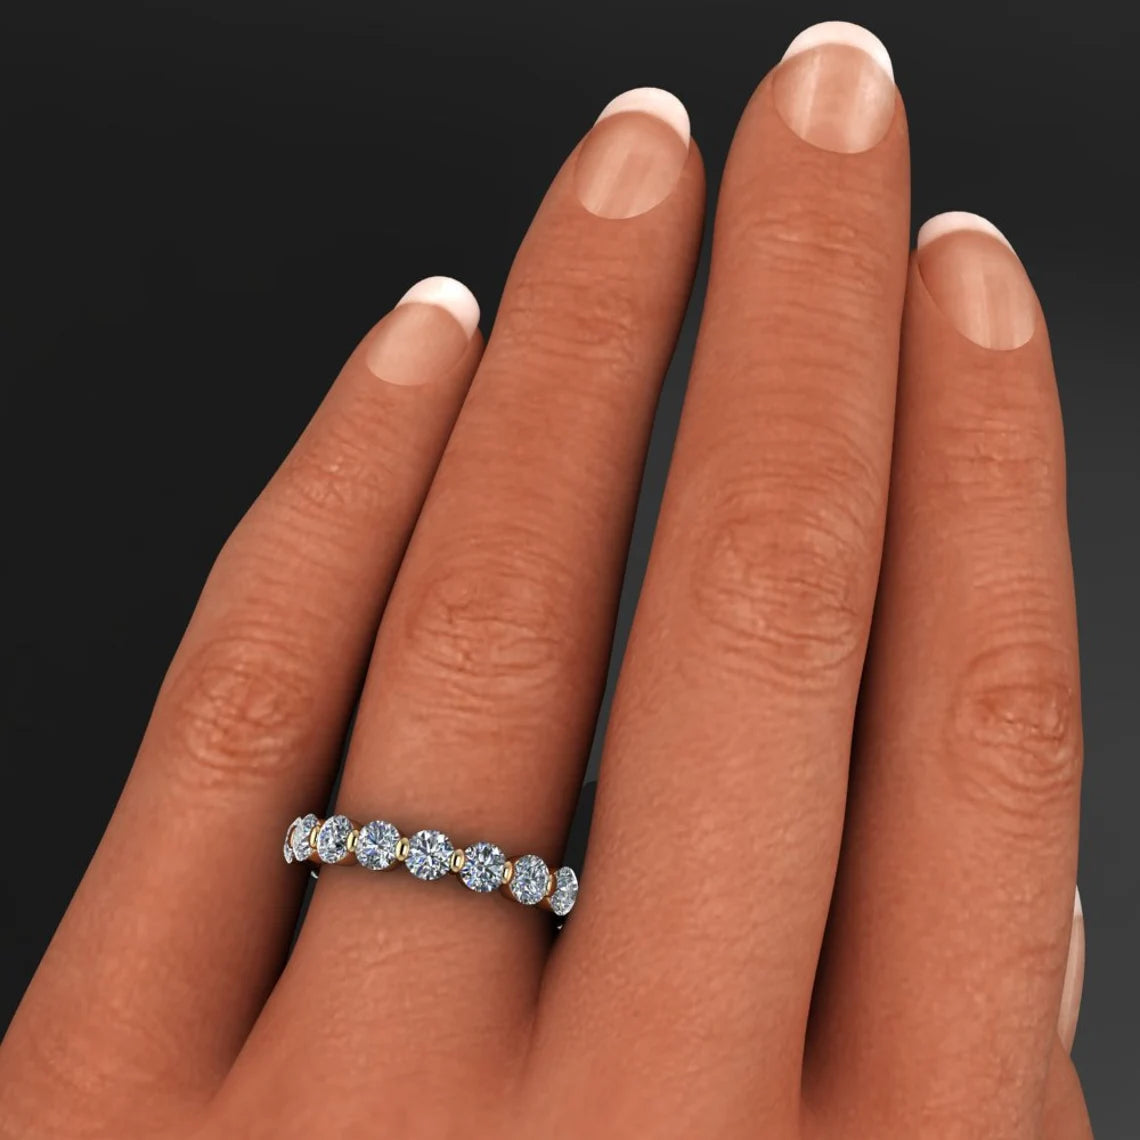 jade ring - 2 carat NEO moissanite eternity band, single shared prong ring - J Hollywood Designs